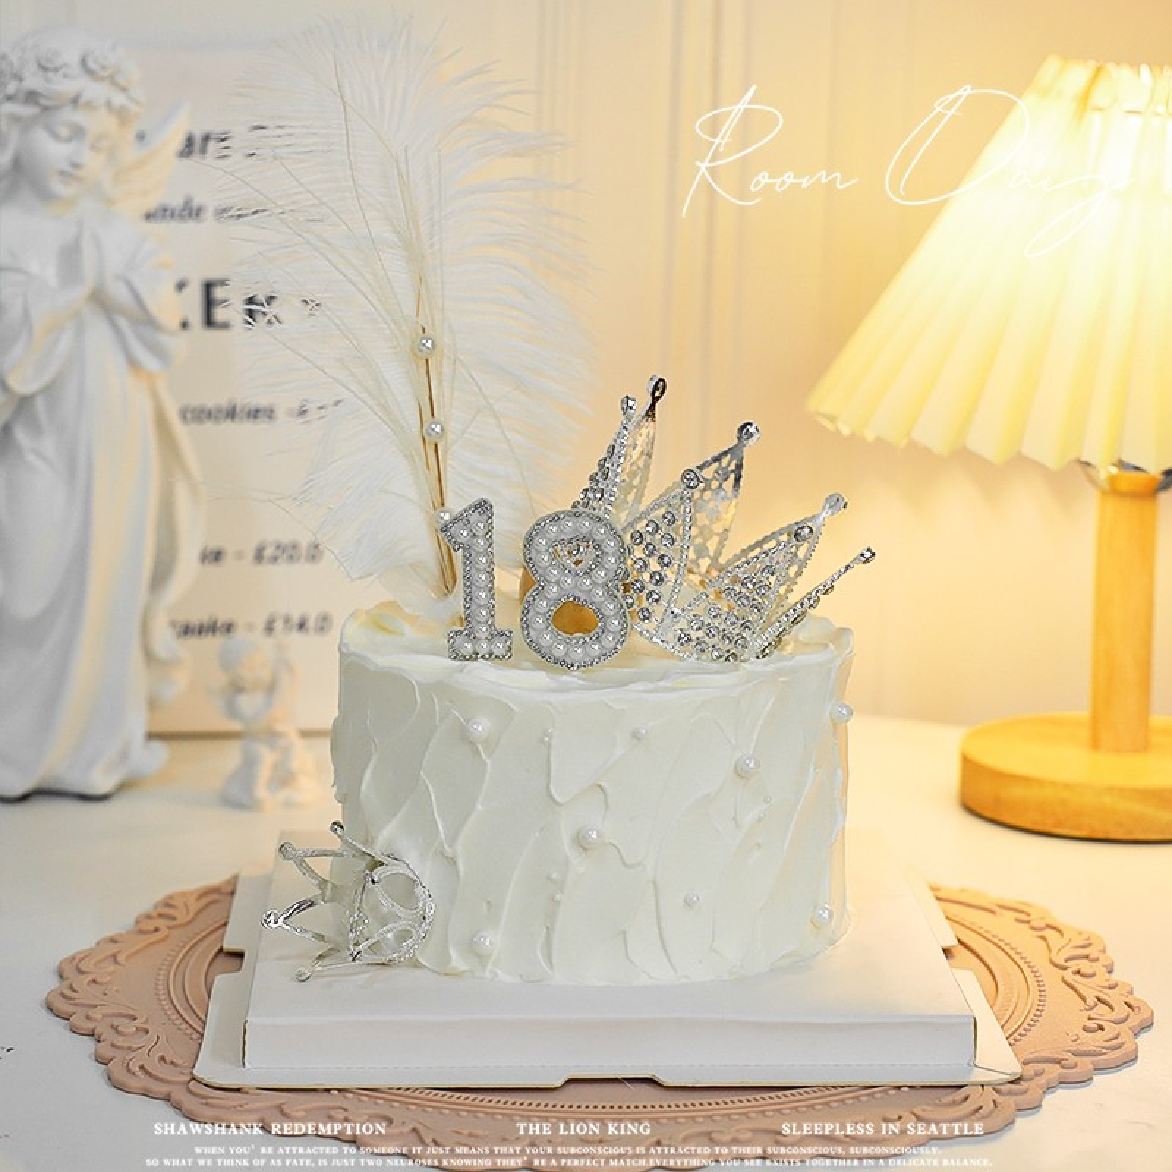 Cake Topper, Cupcake Decoration - Decorative Glitter & White Pearl - Number 9